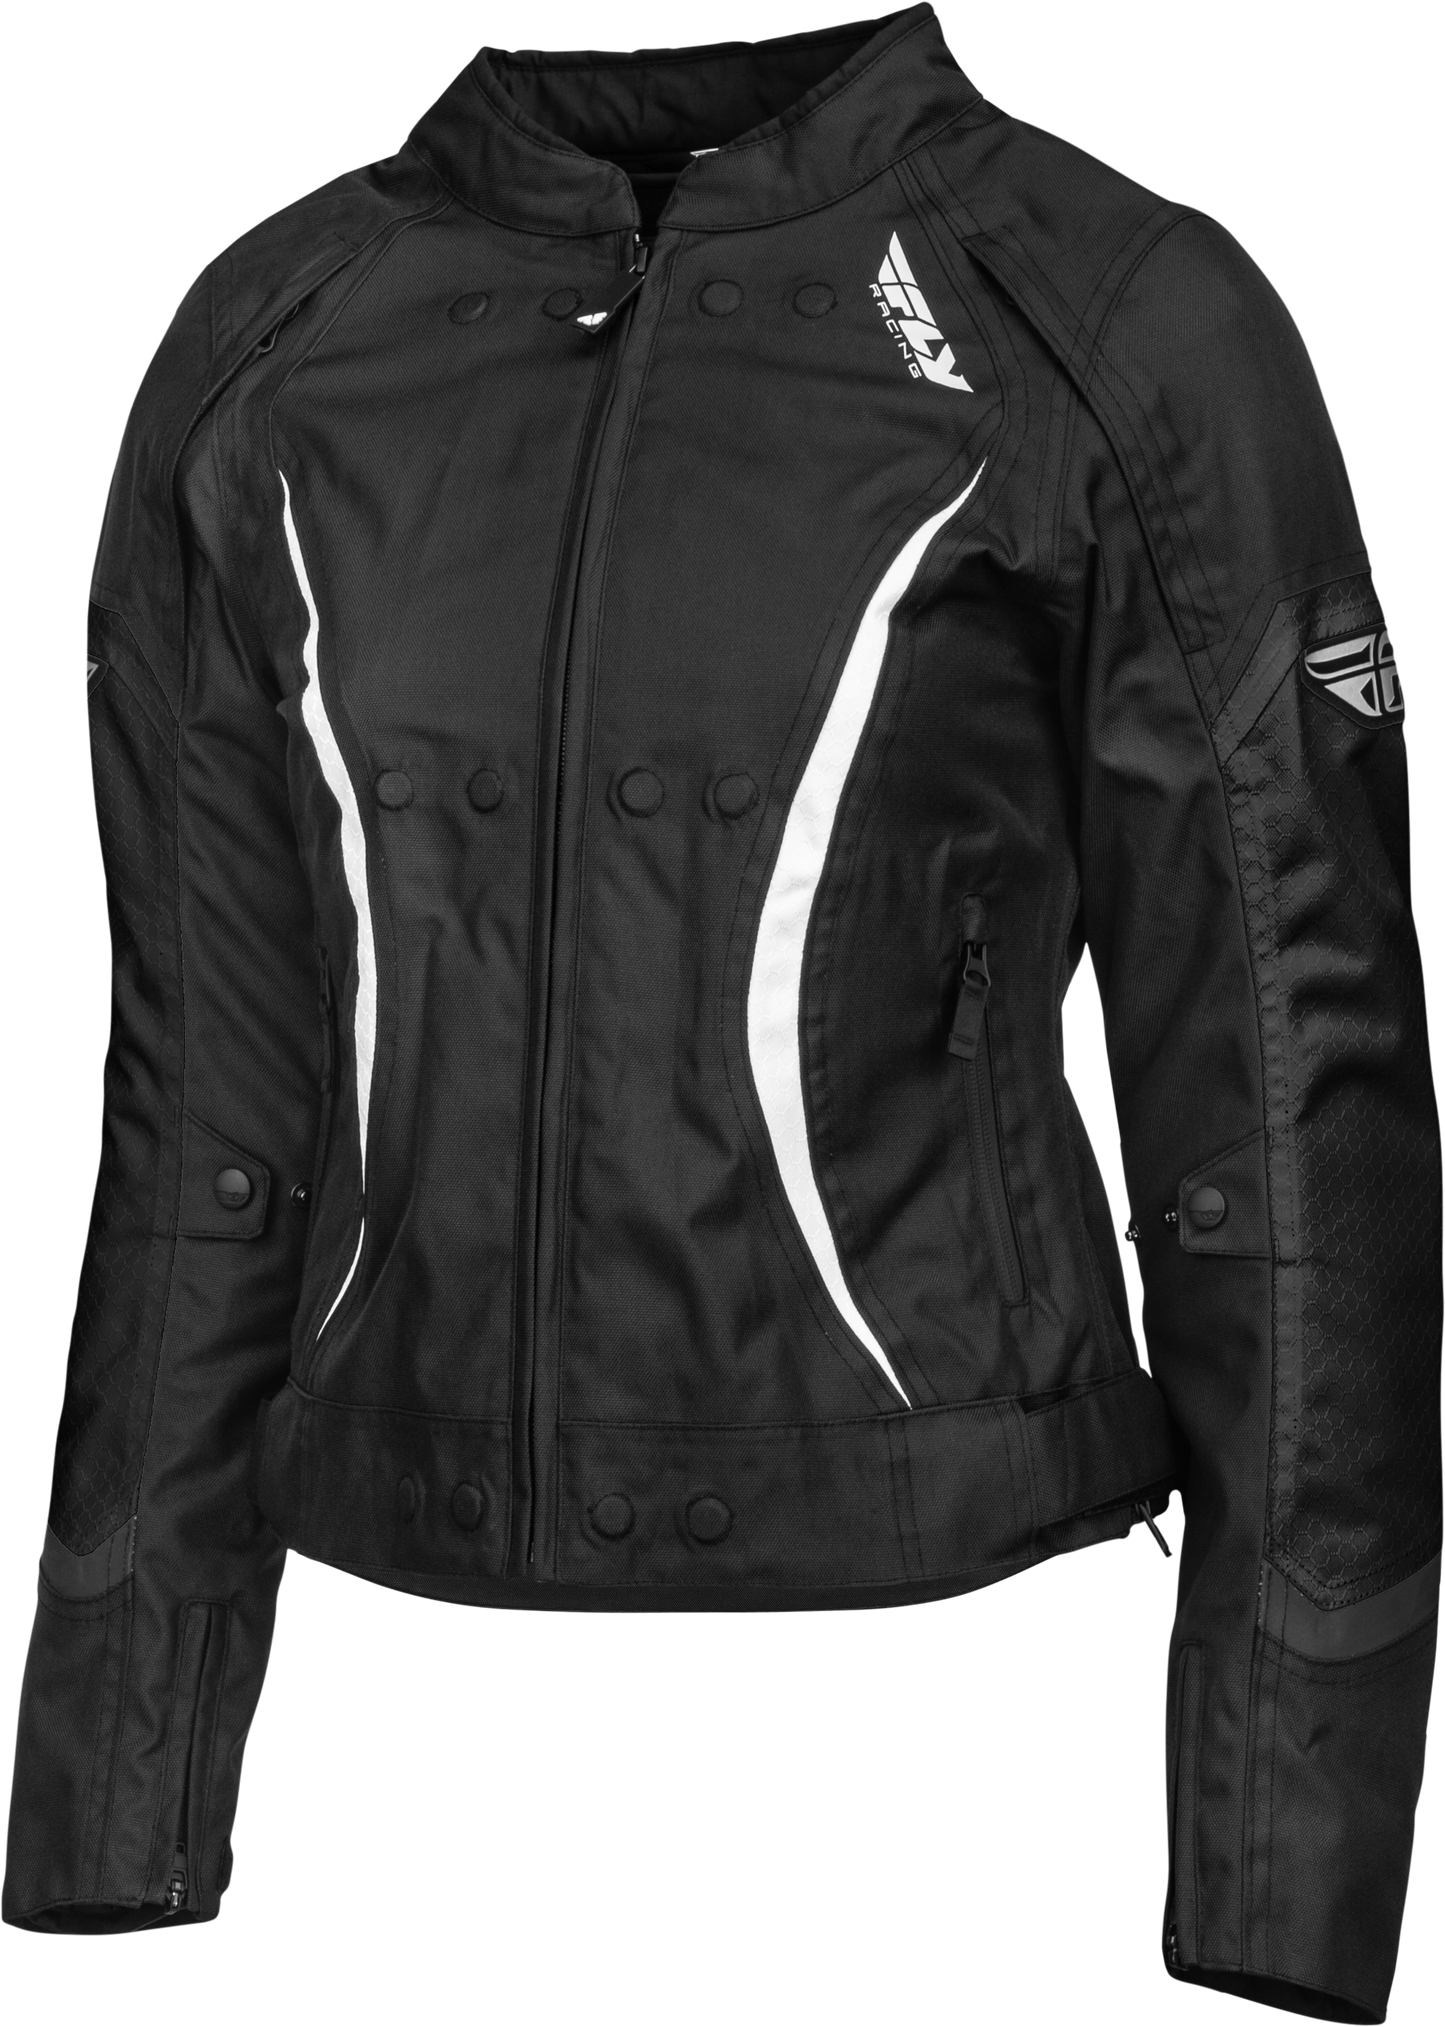 FLY RACING Women's Butane Jacket Black/White Lg 477-7042L